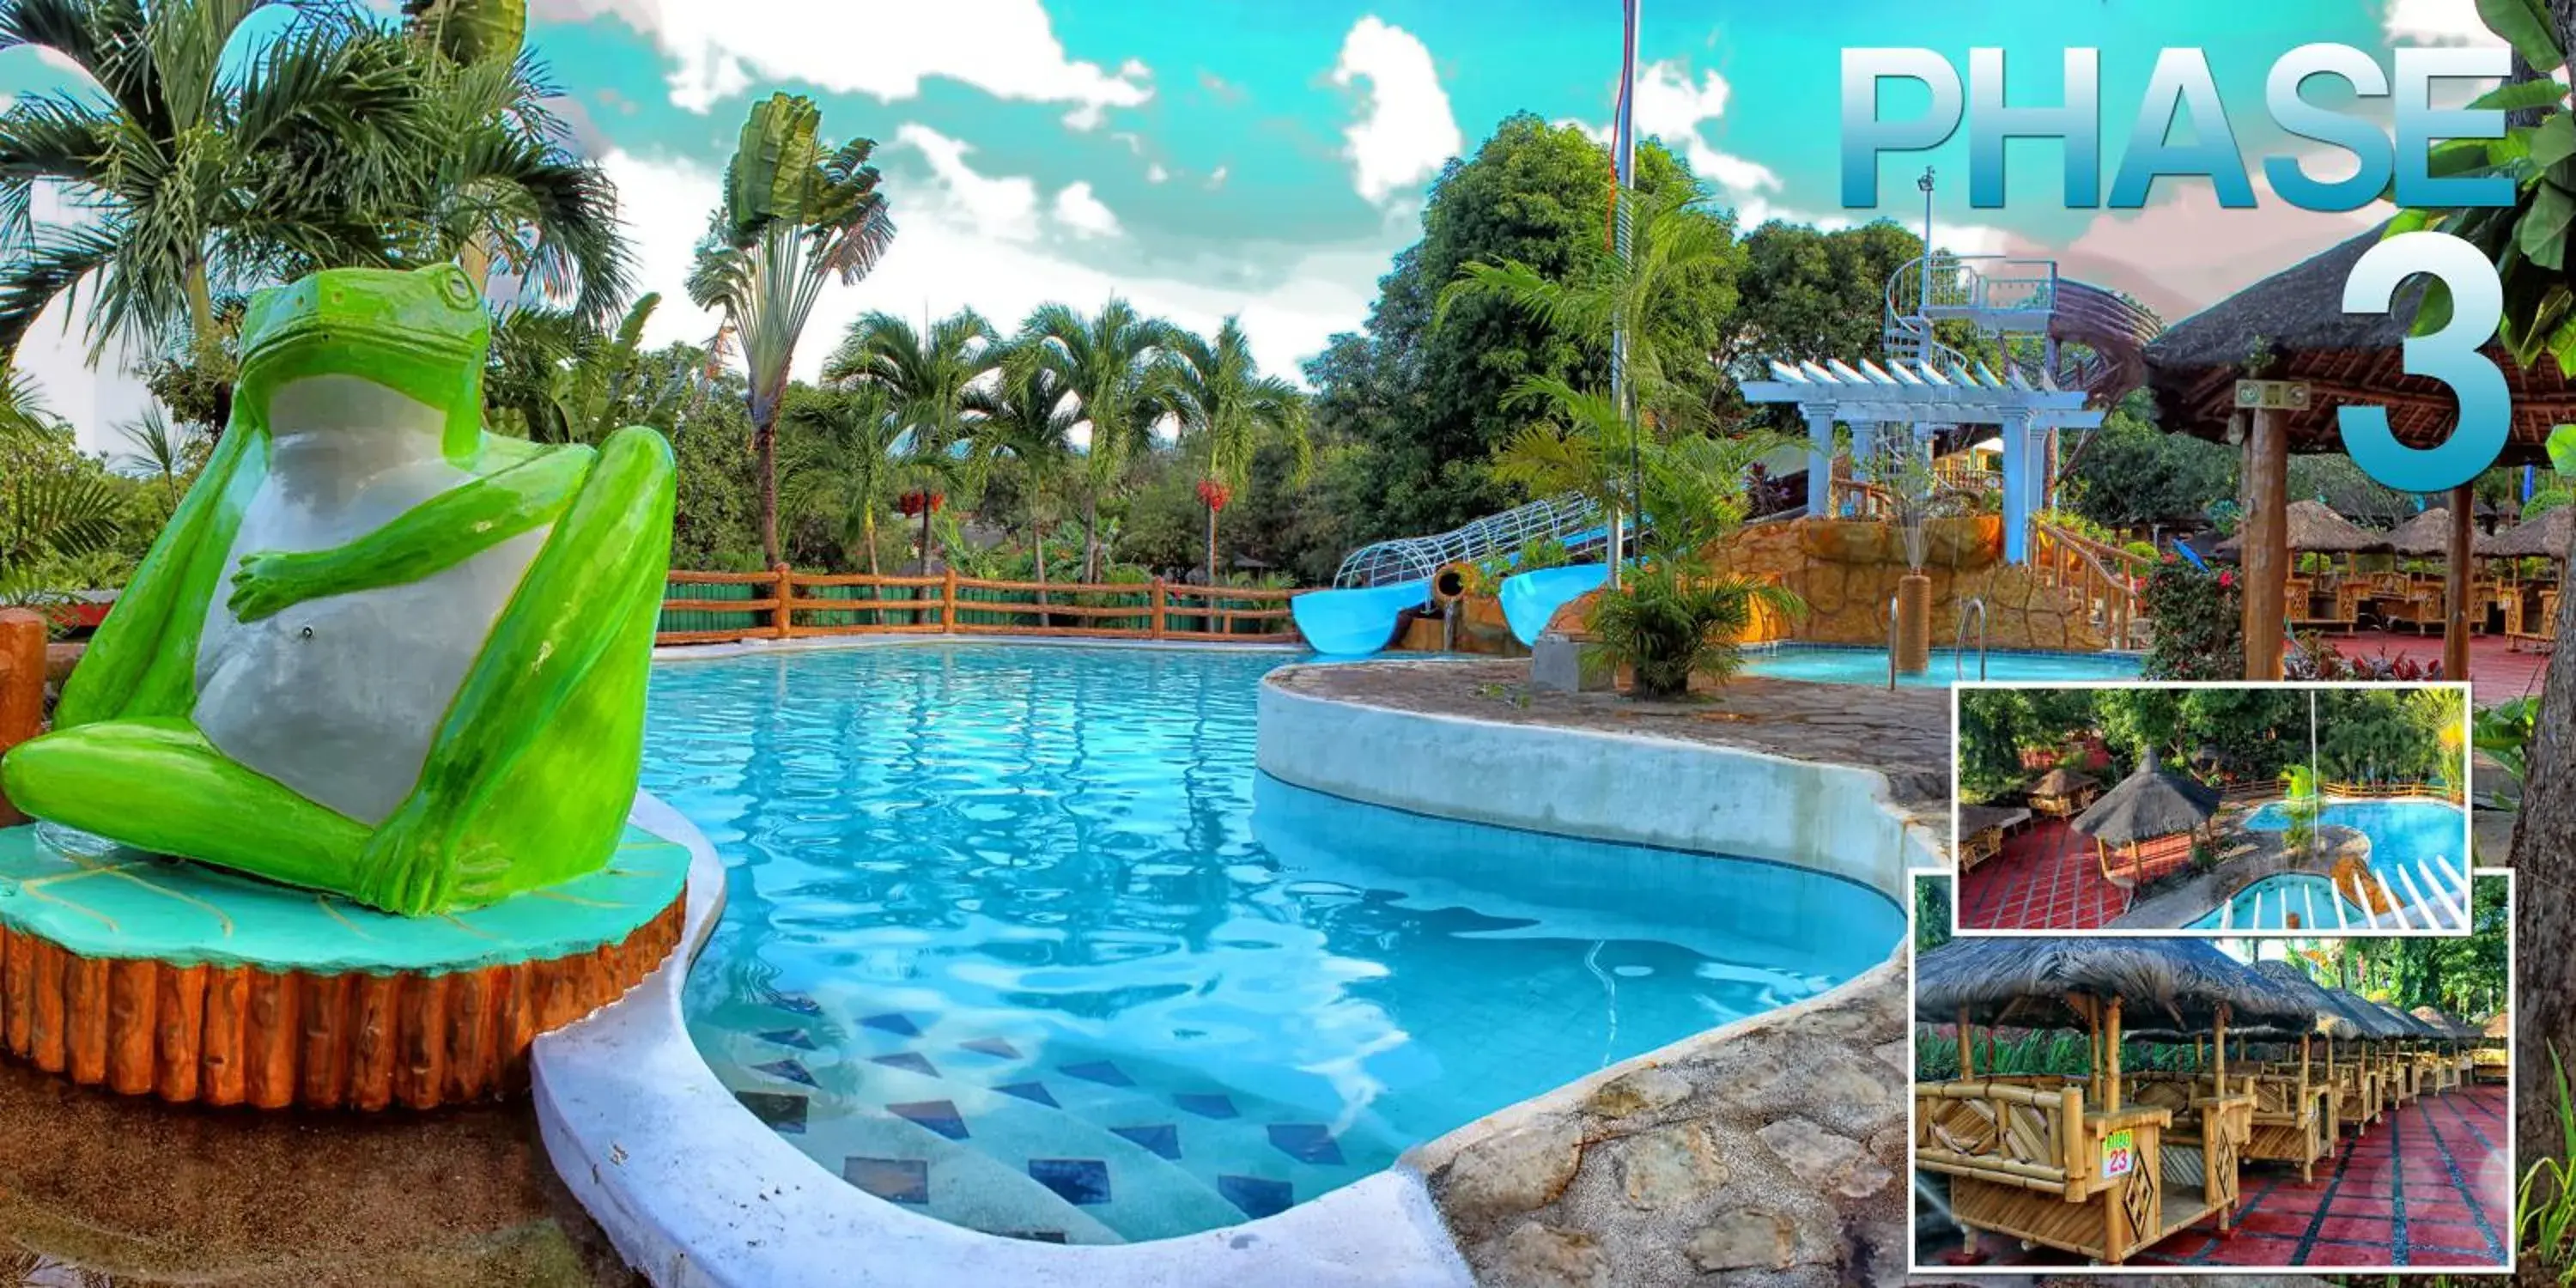 Swimming Pool in Loreland Farm Resort